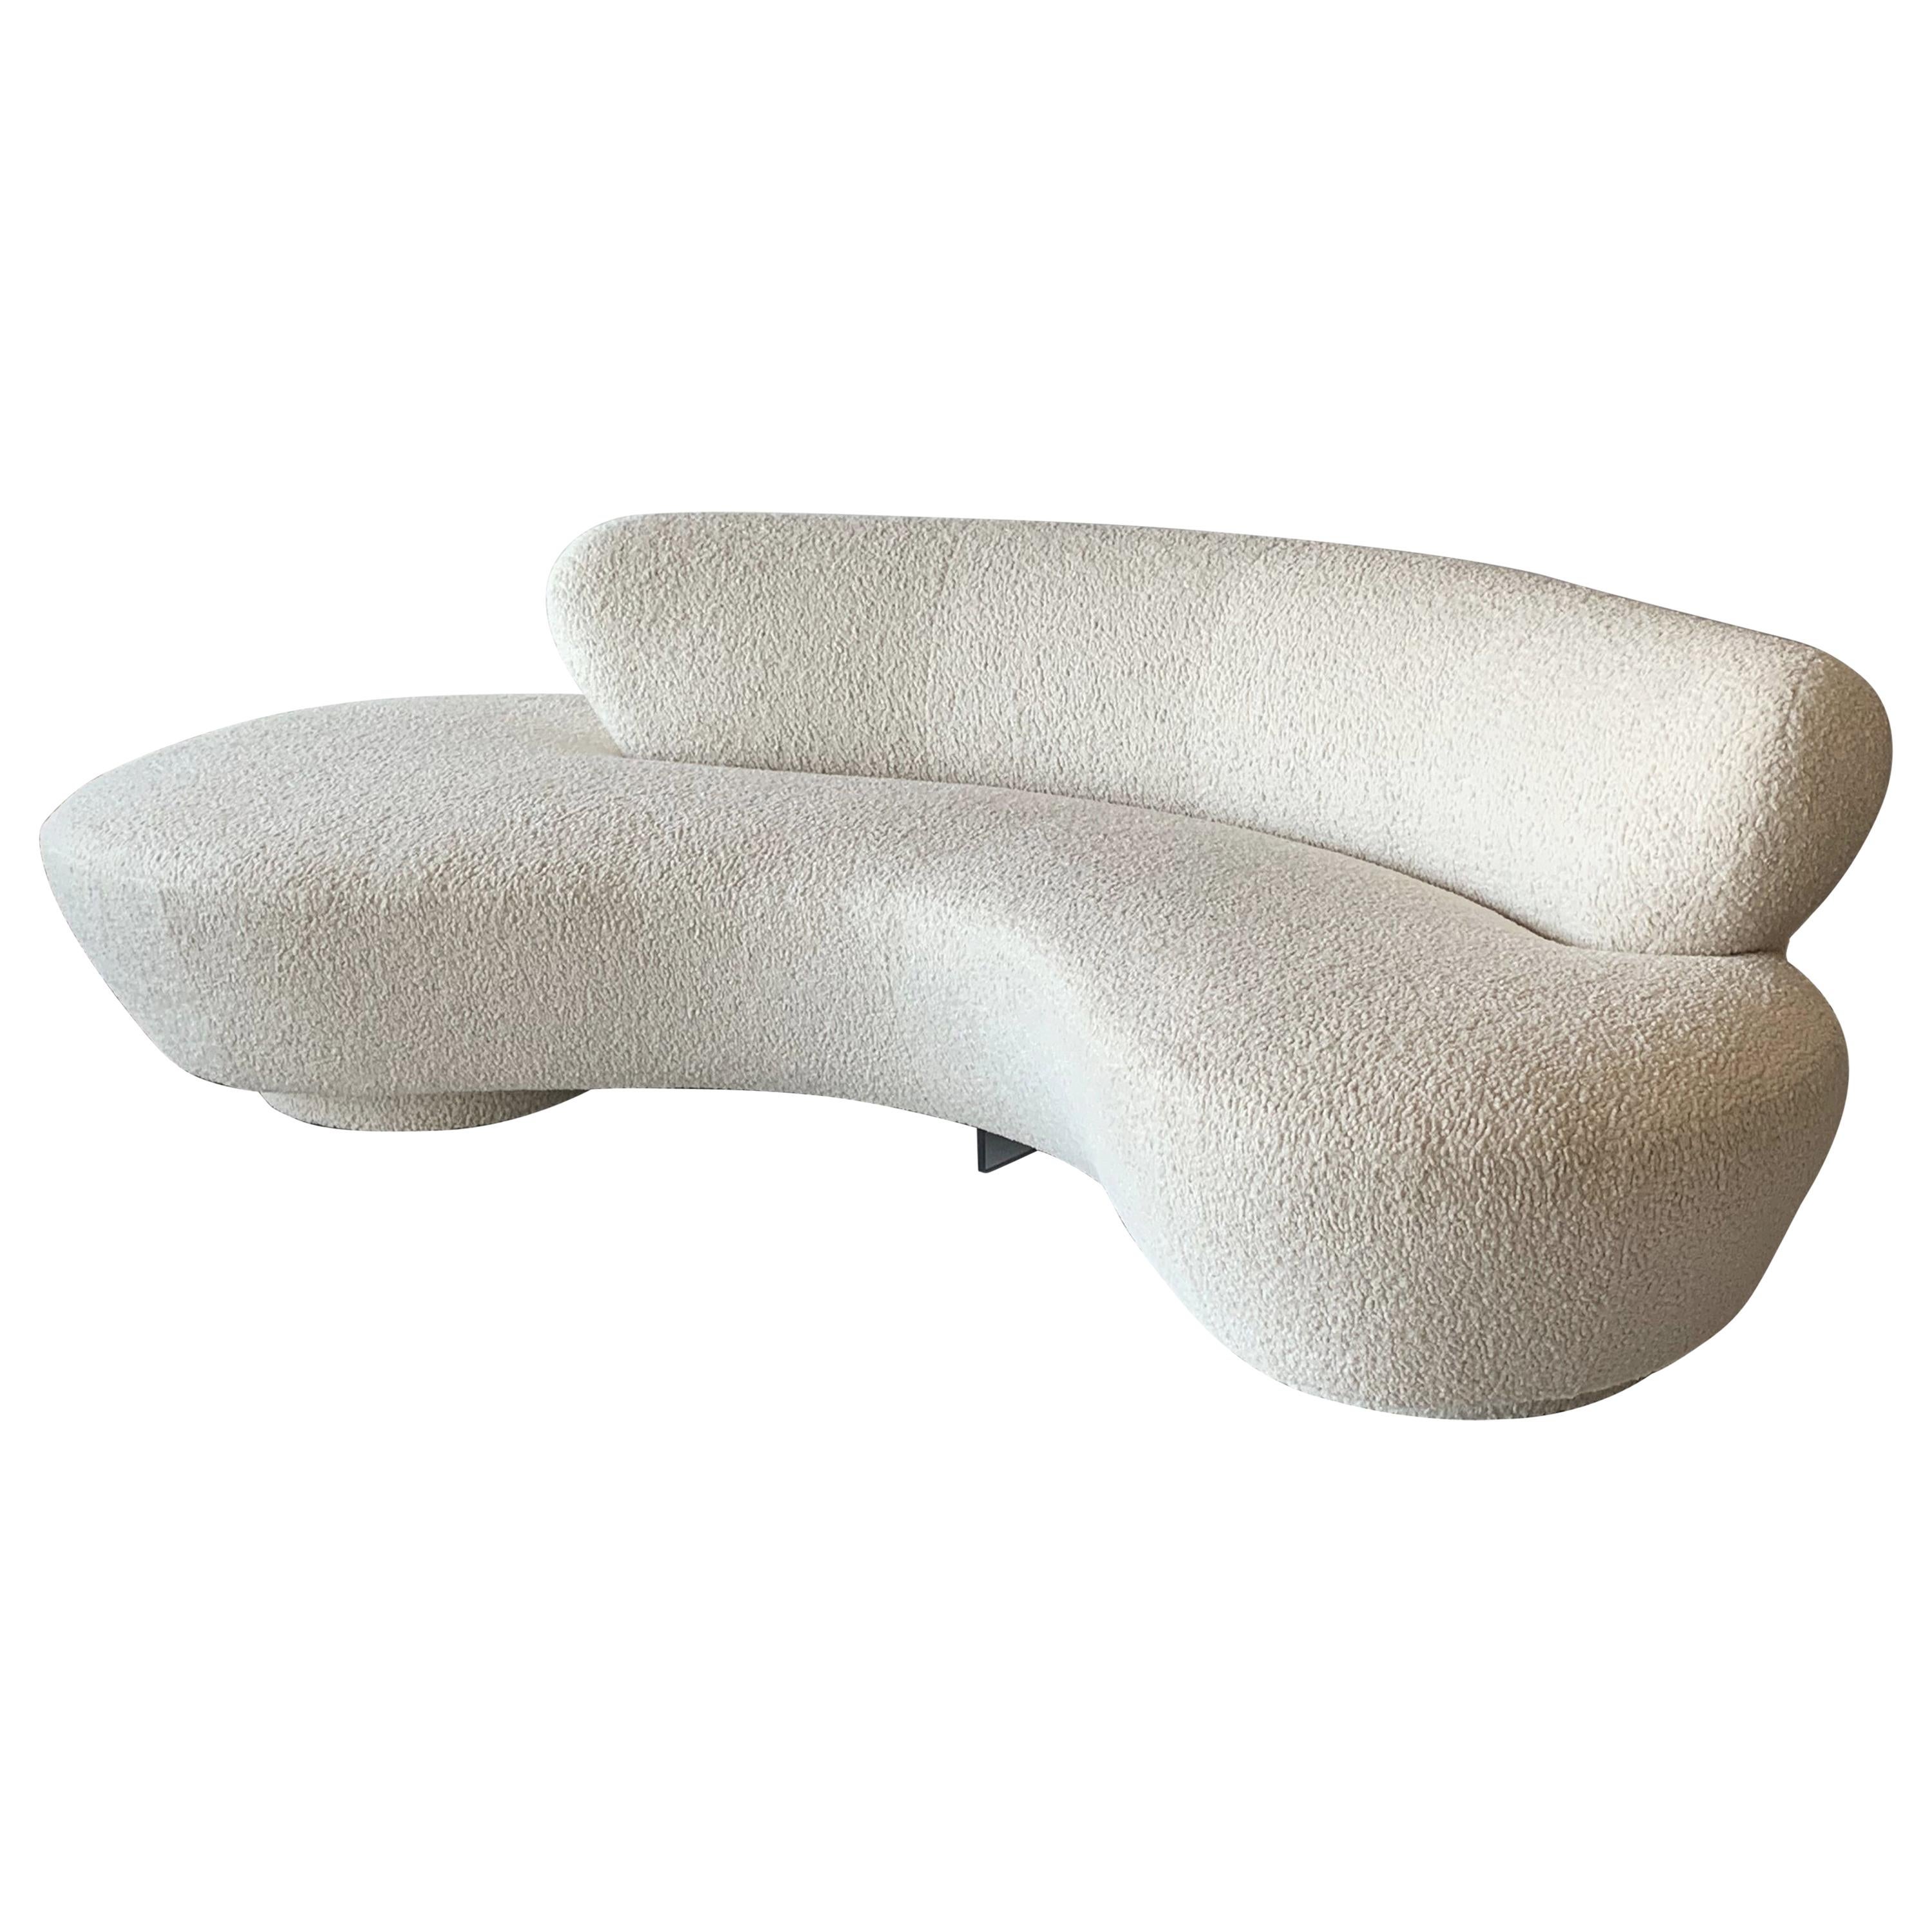 Vladimir Kagan Serpentine Cloud Sofa Upholstered in Heavy Boucle